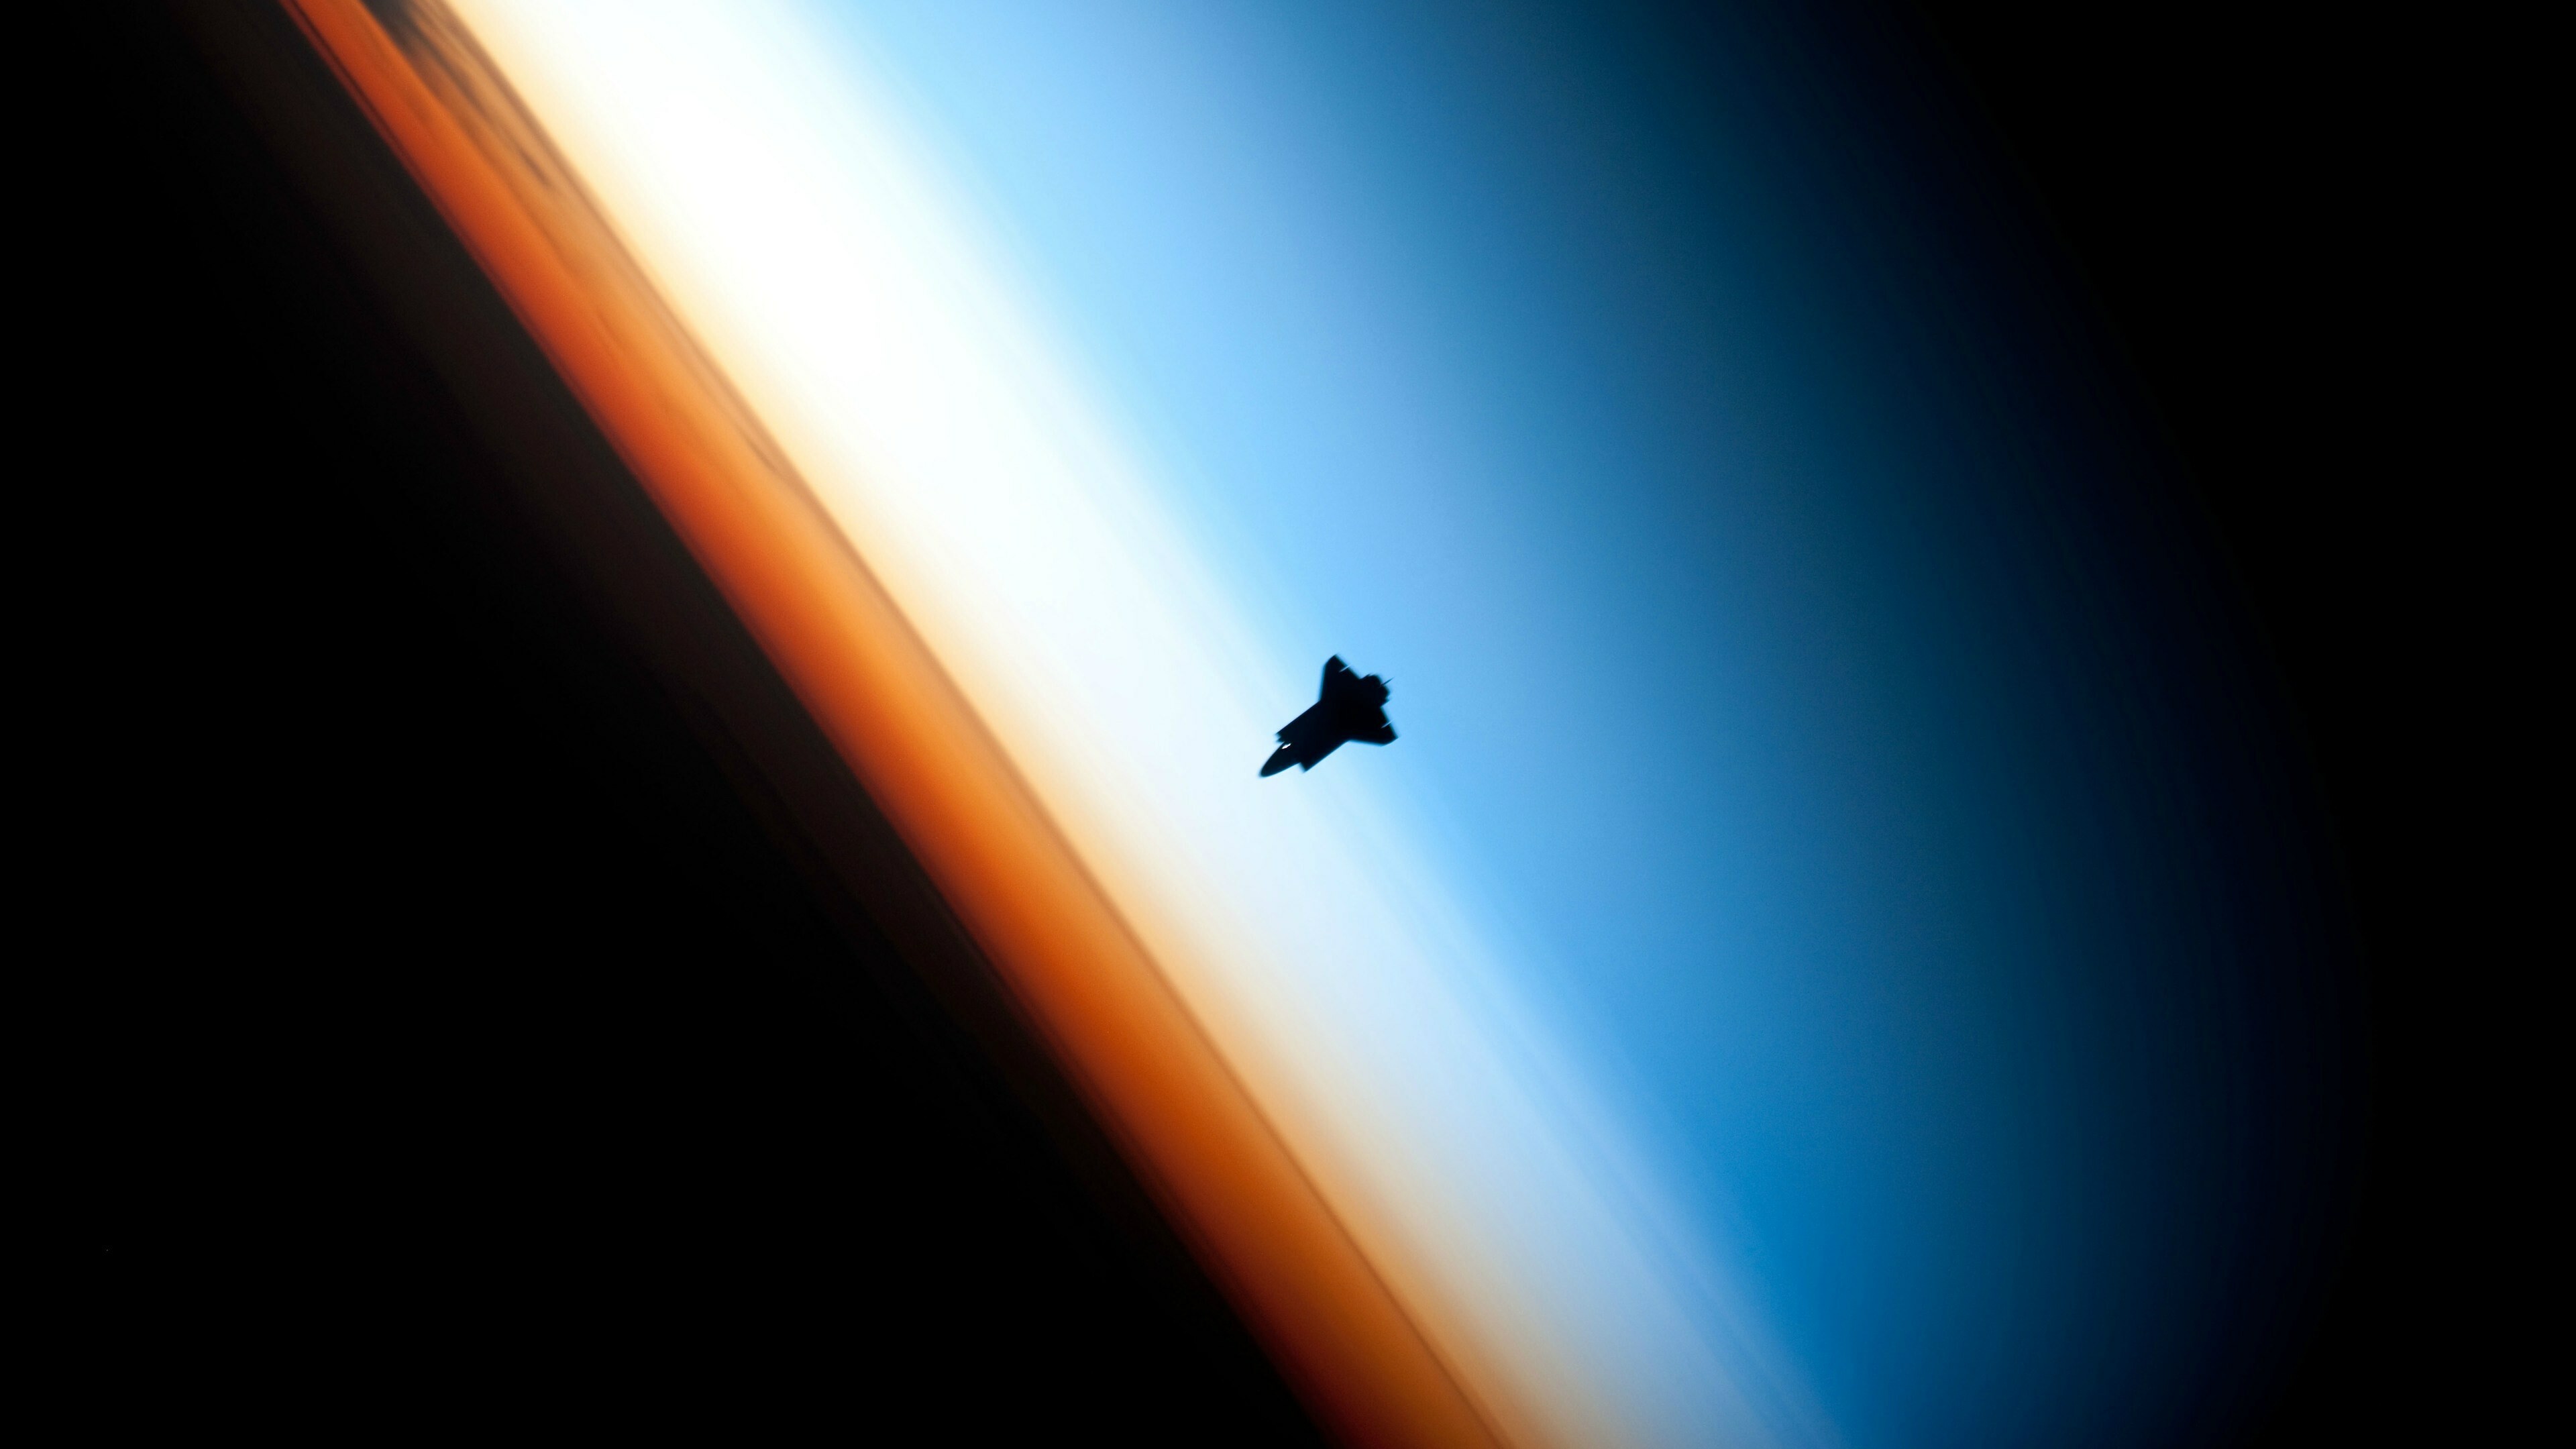 Space Shuttle: Silhouette, NASA orbiter vehicle, Horizon, Atmosphere. 3840x2160 4K Background.